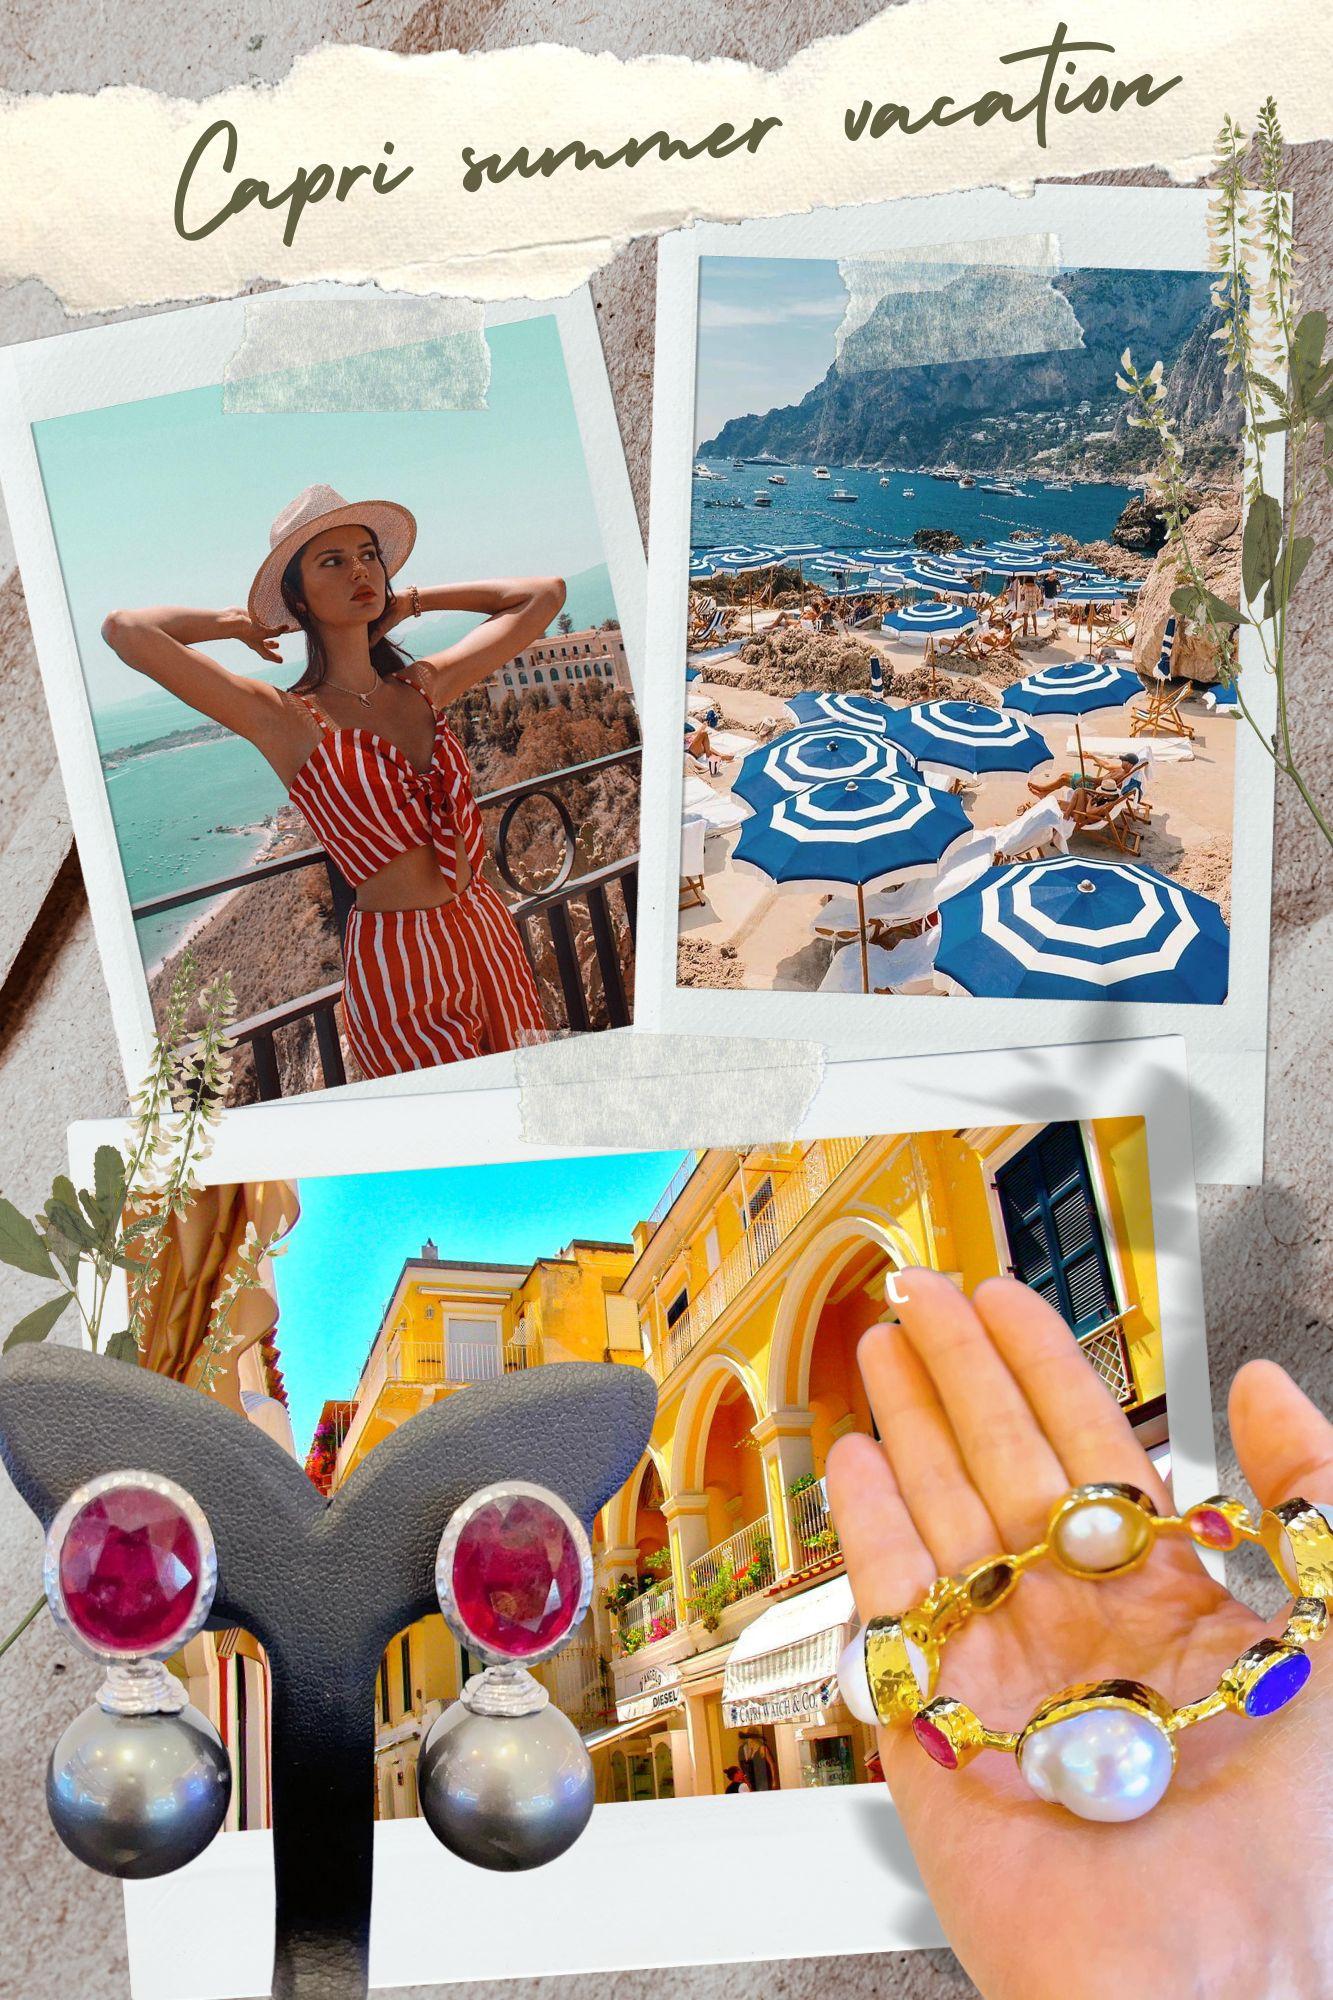 Belle Époque Bochic “Capri” Star Ruby, Emerald, Sapphire Necklace Set in 22k Gold & Silver